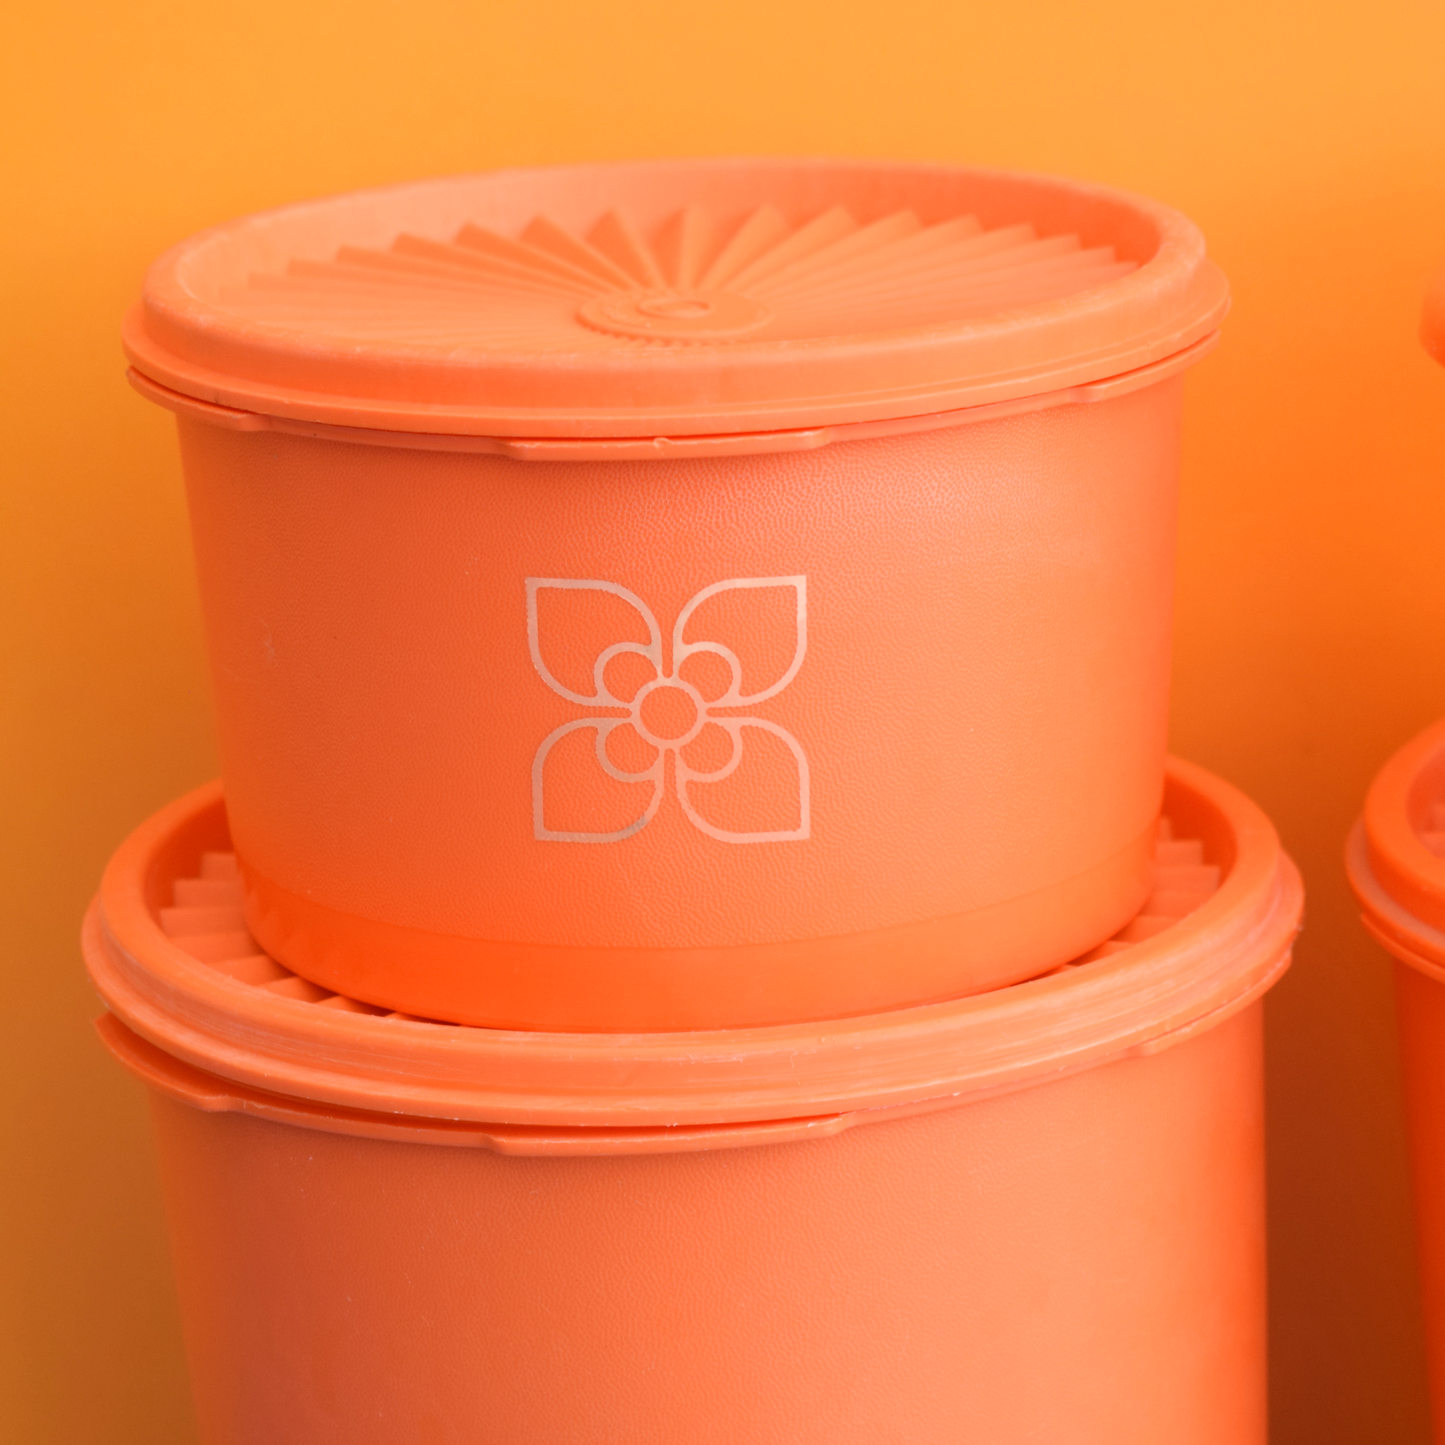 Vintage 1970s Tupperware Containers/ Juicer- Orange